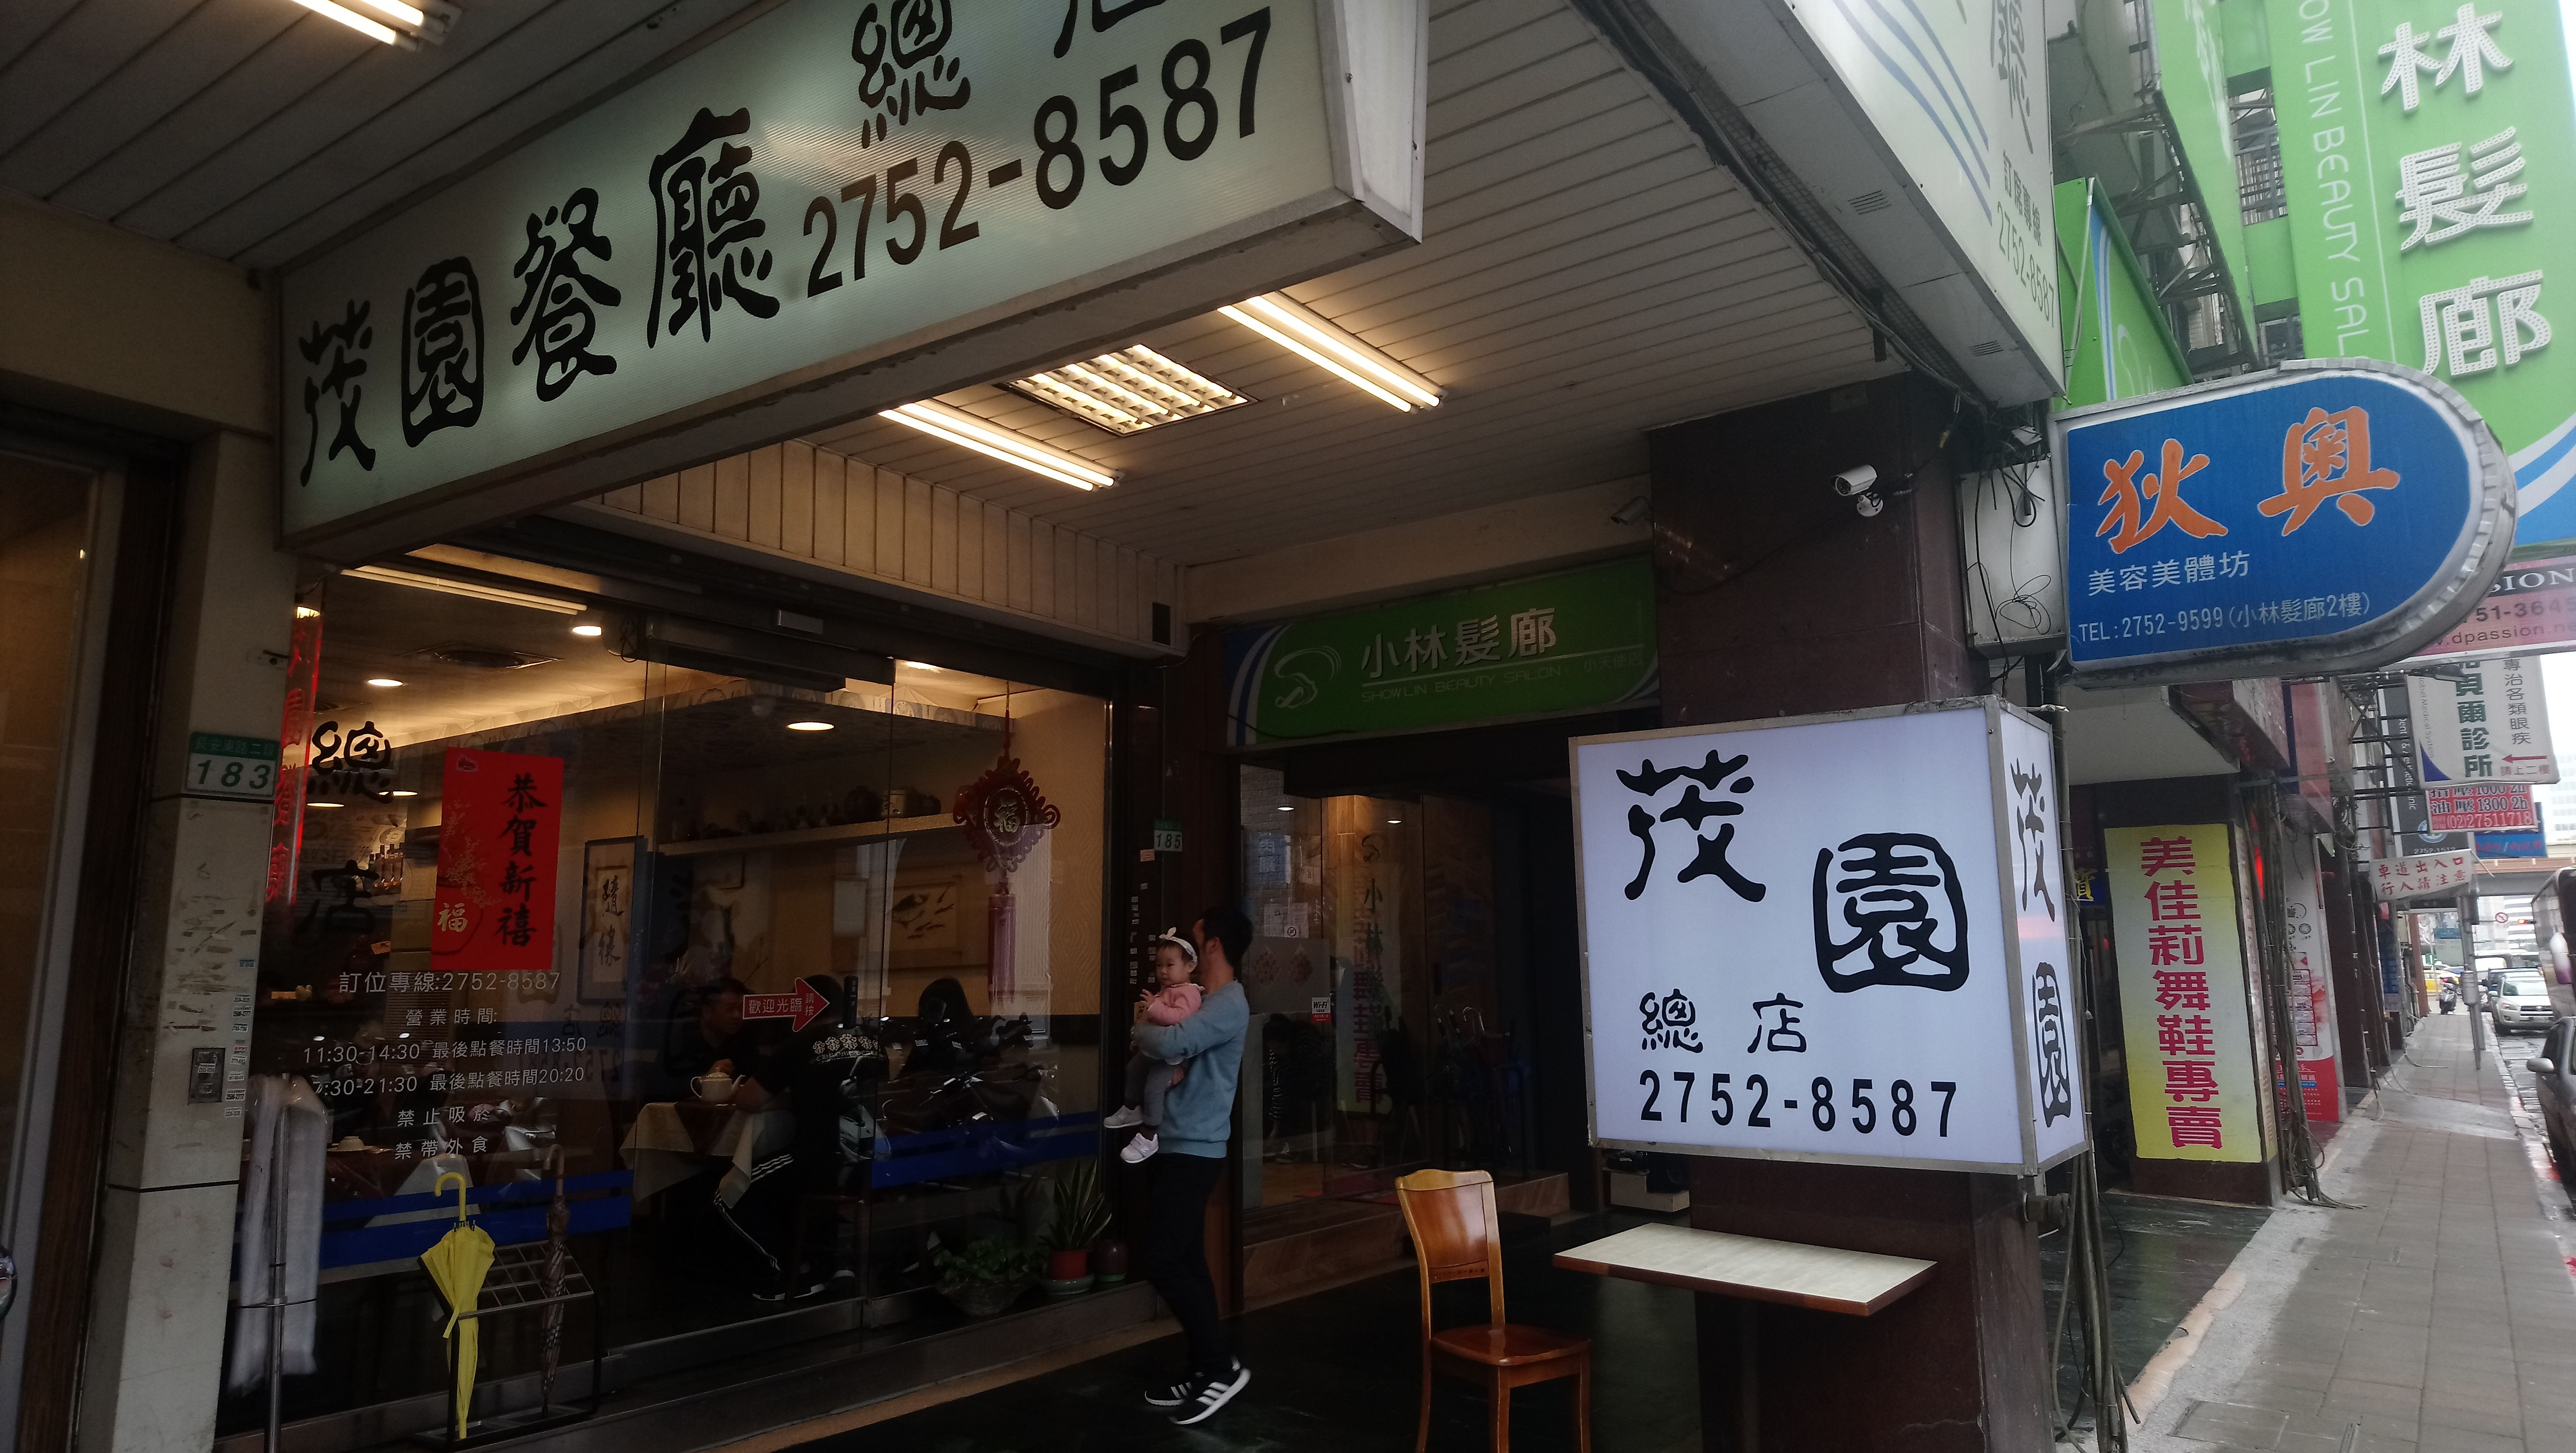 [Michelin Guide Taipei] [Bib Gourmand] Mao Yuan - the Taiwanese Cuisine 🍴🍷 [米其林台北指南] 台菜之巔・茂園餐廳